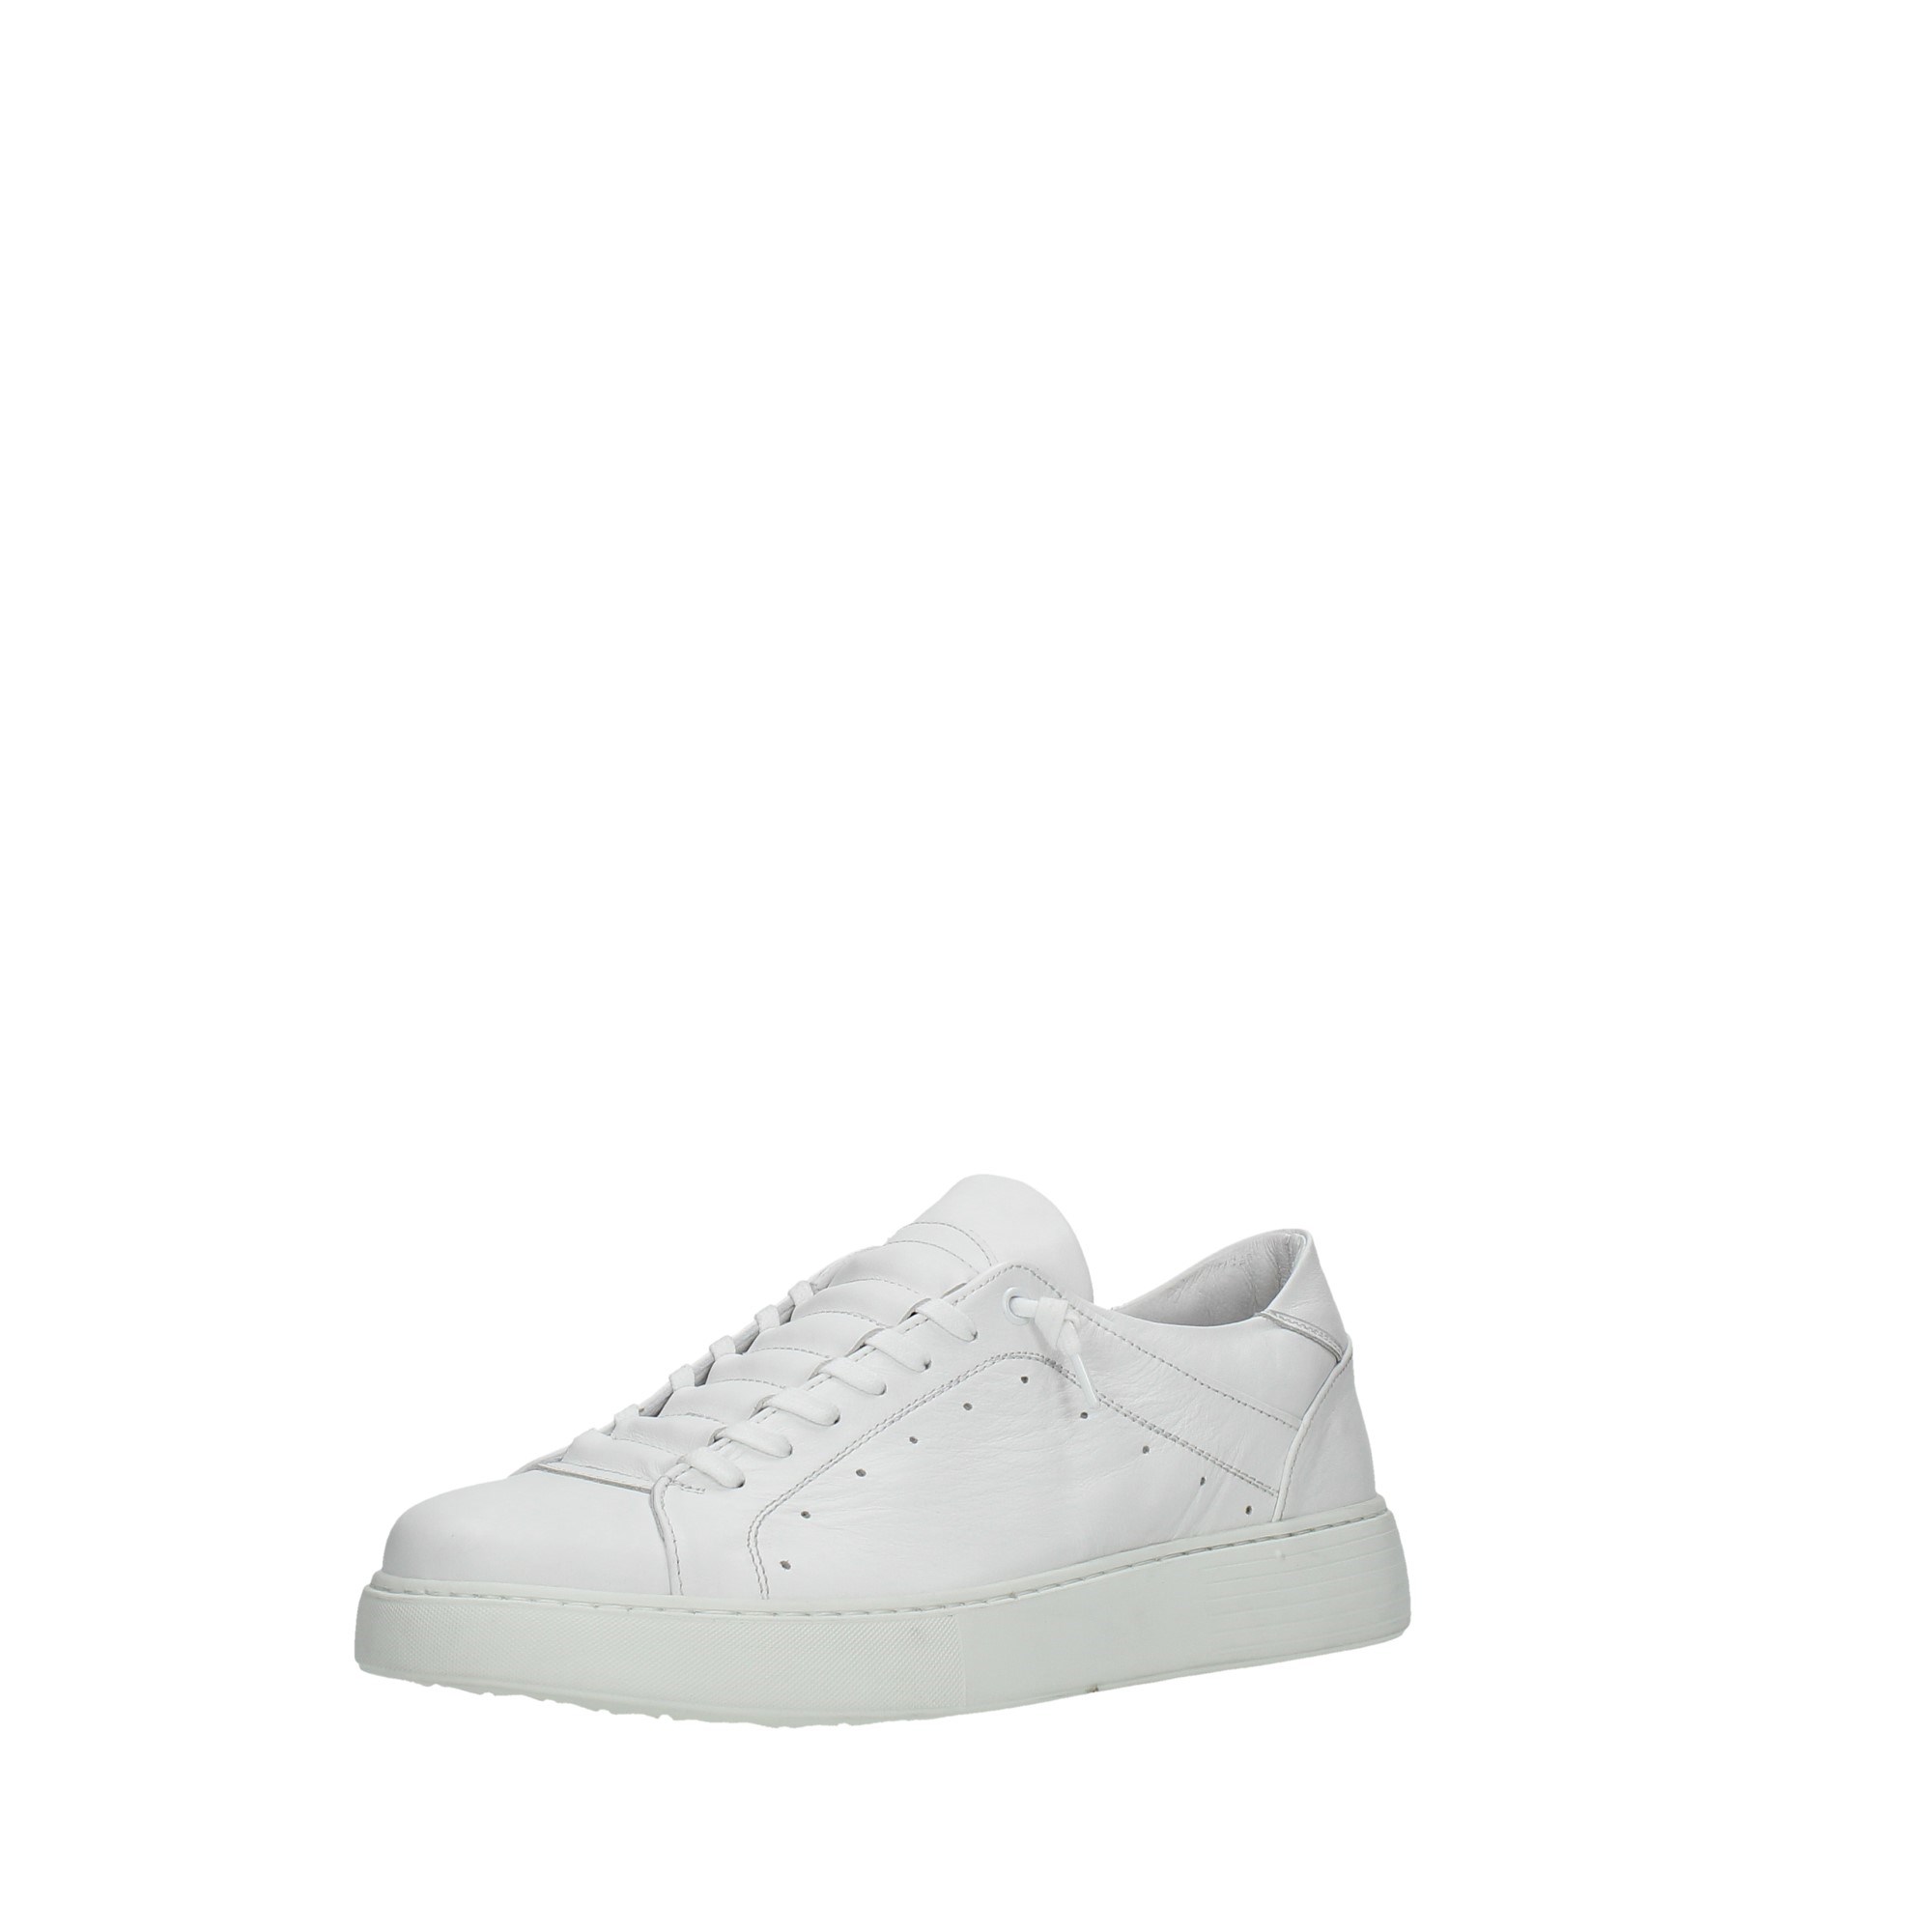 Pawelk's Scarpe Uomo Sneakers Bianco 20620